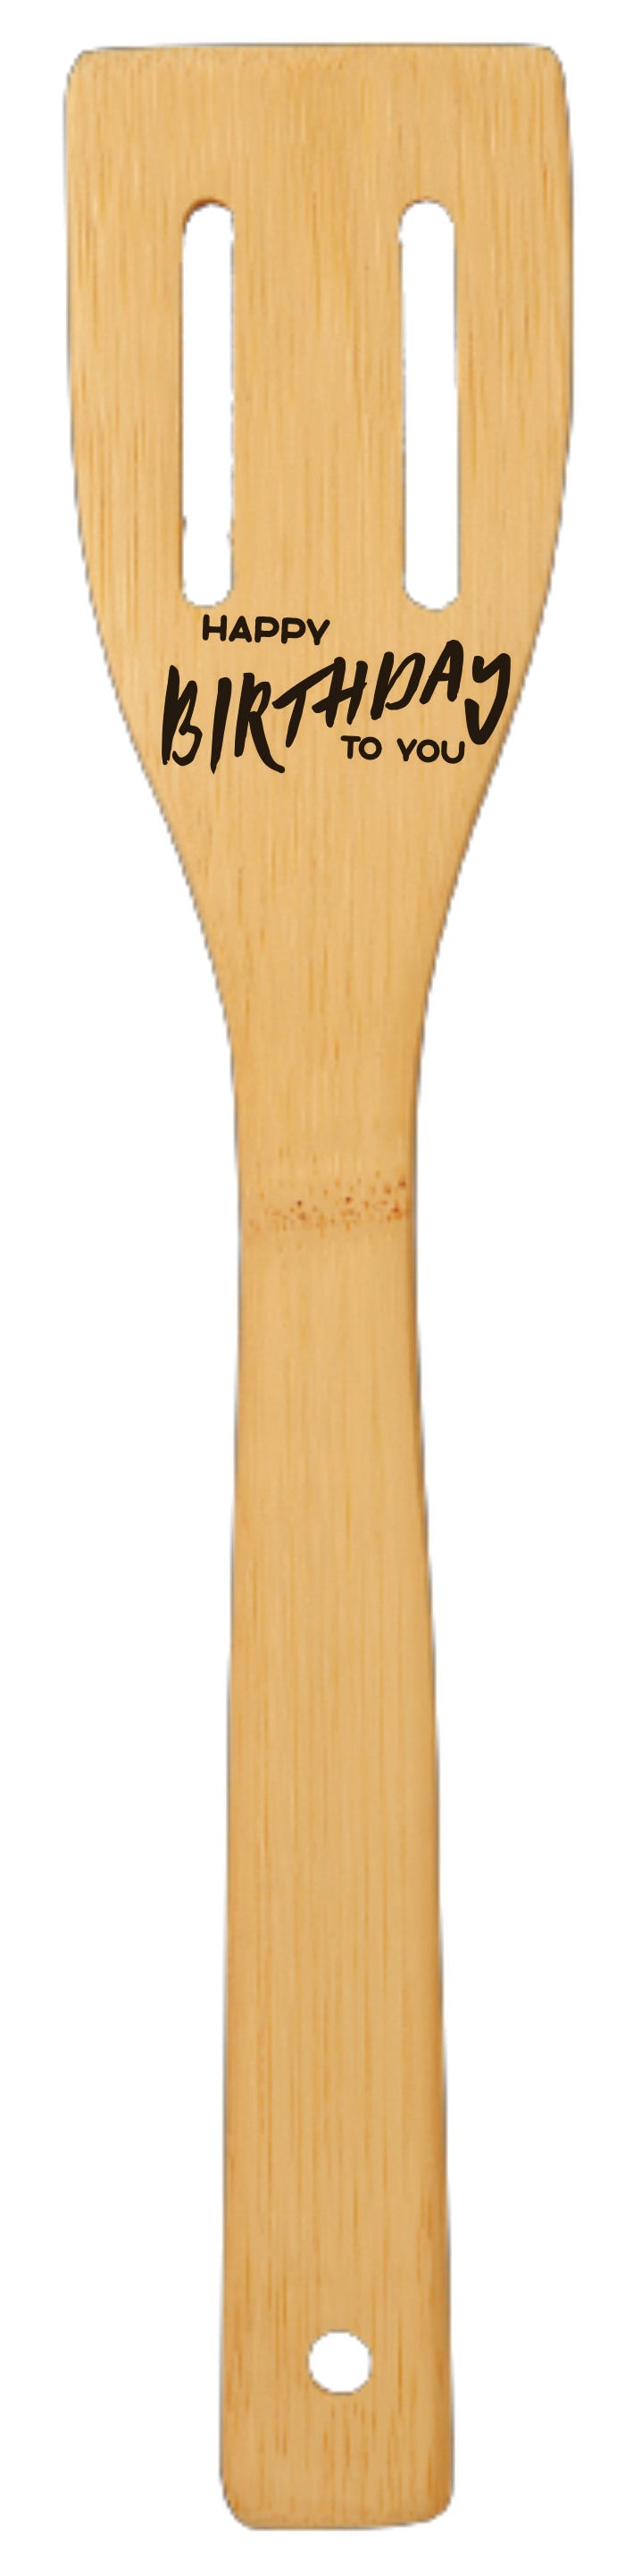 12" Bamboo Spatula